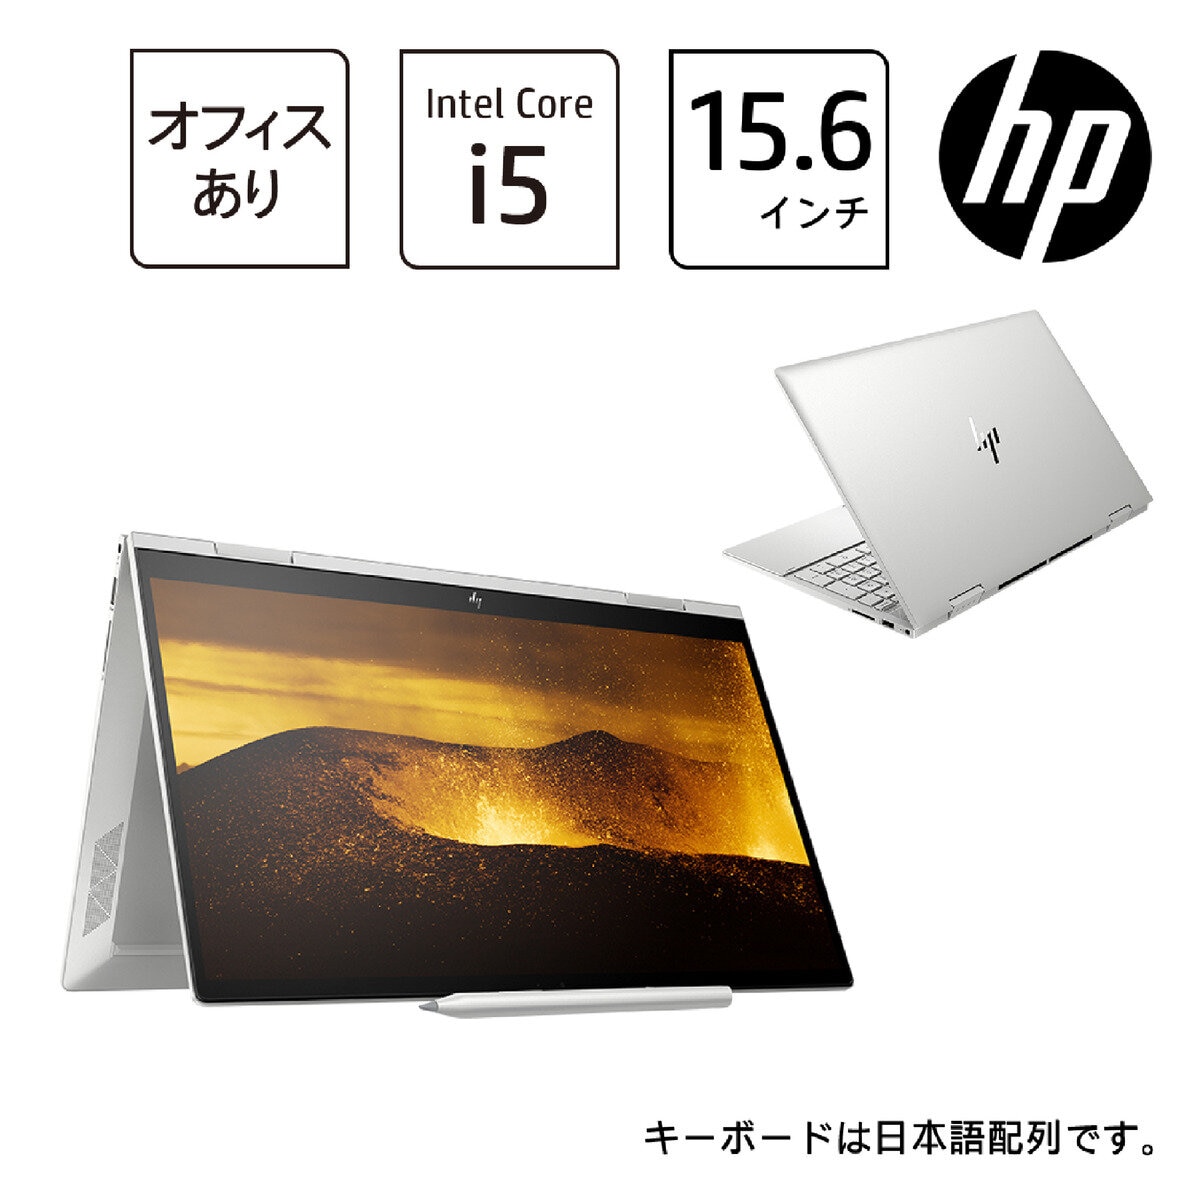 HP ENVY X360 15.6インチ ノートPC 54H73PA-AAAA | Costco Japan